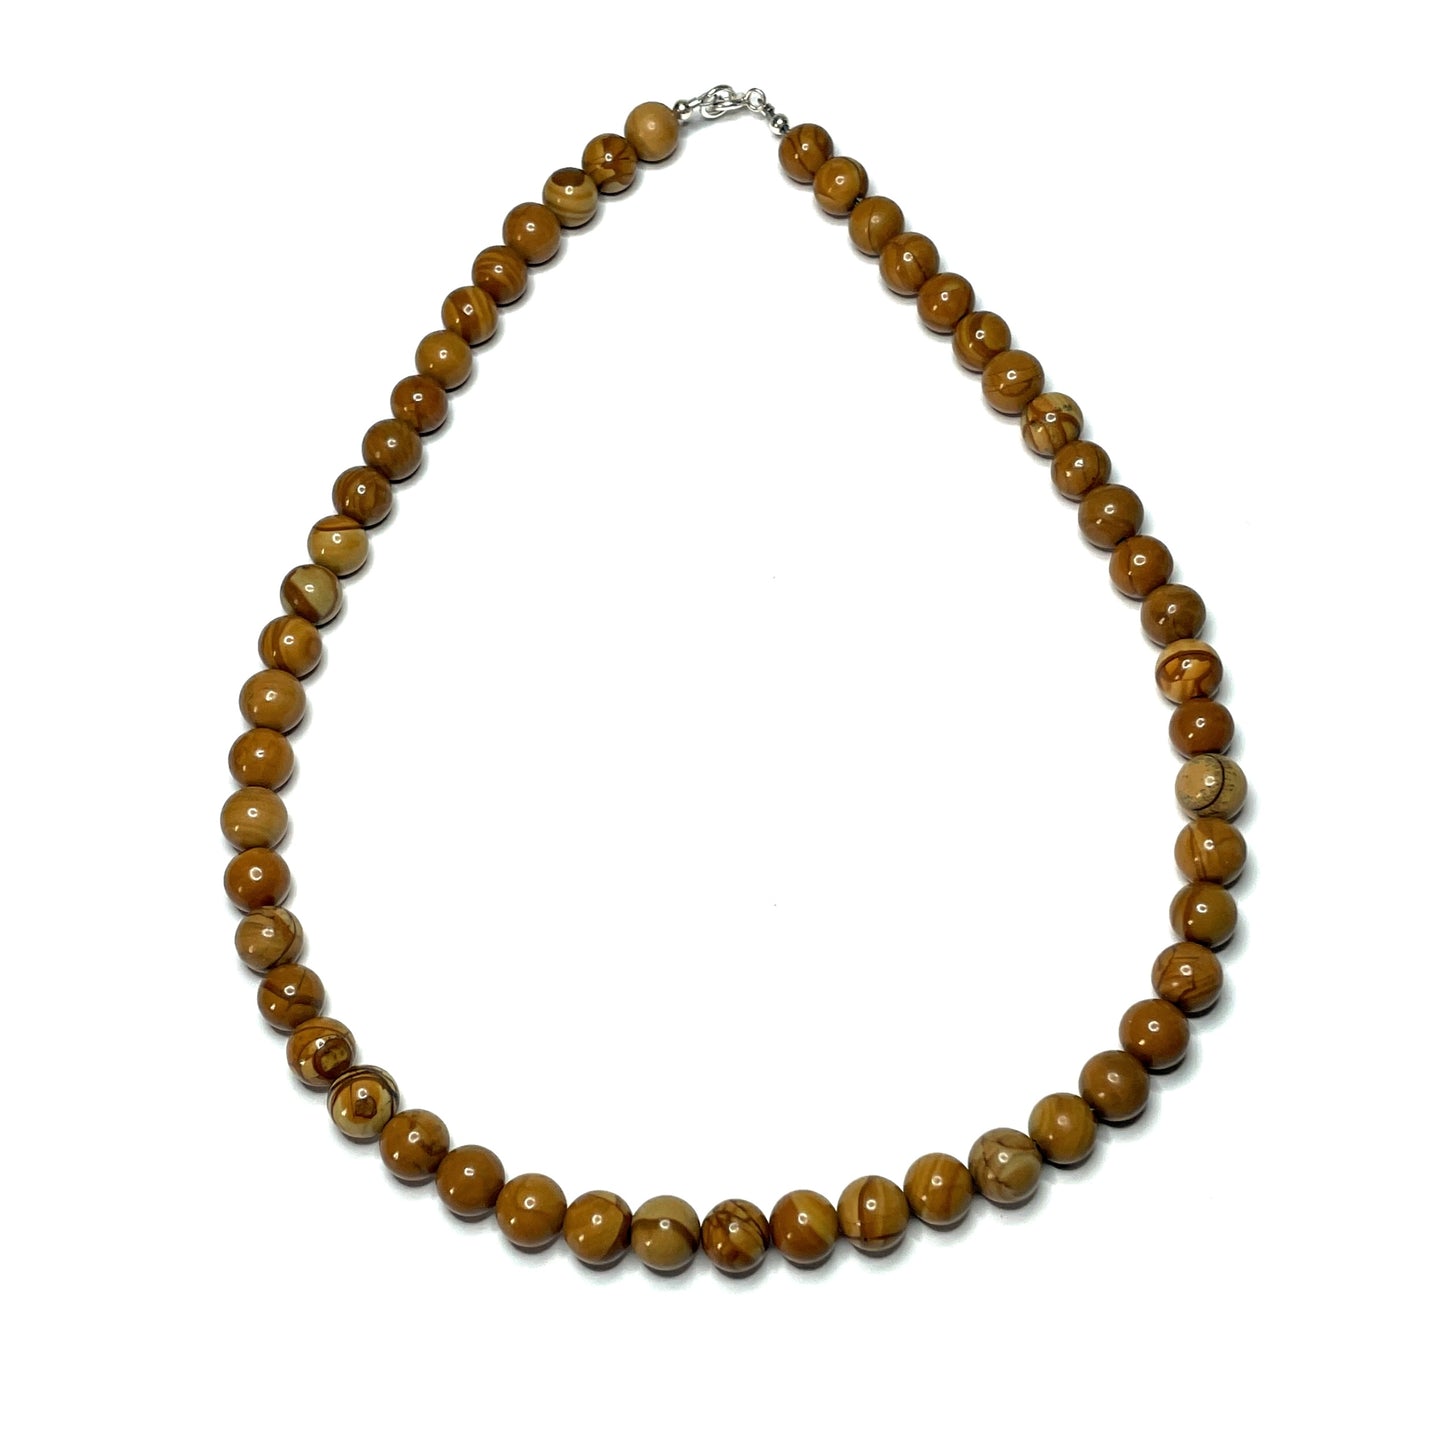 Wood grain jasper gemstone necklace